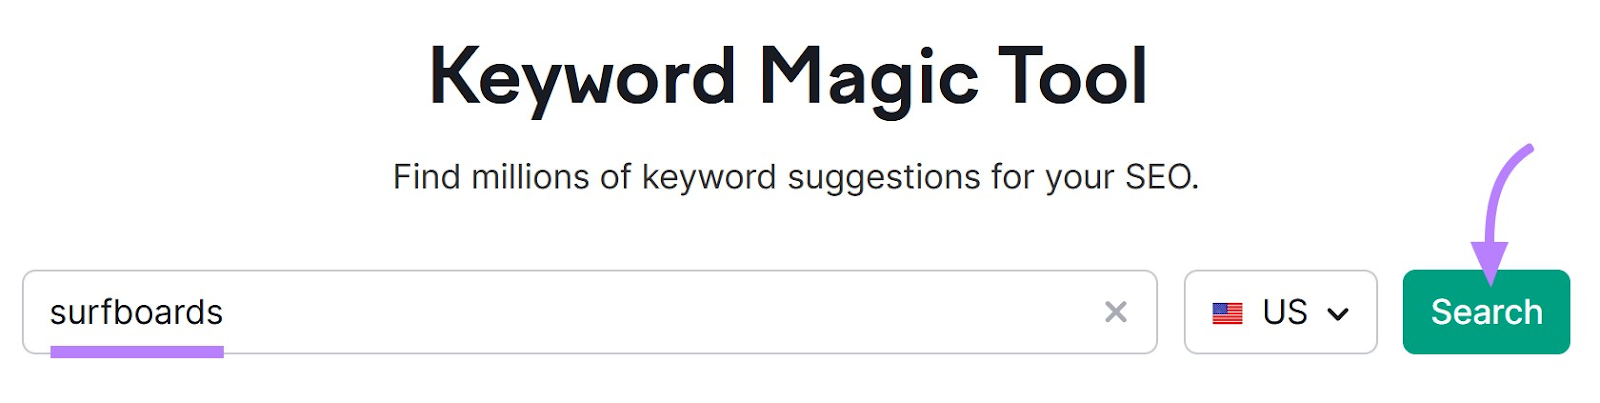 "surfboards" in Semrush’s Keyword Magic Tool search bar